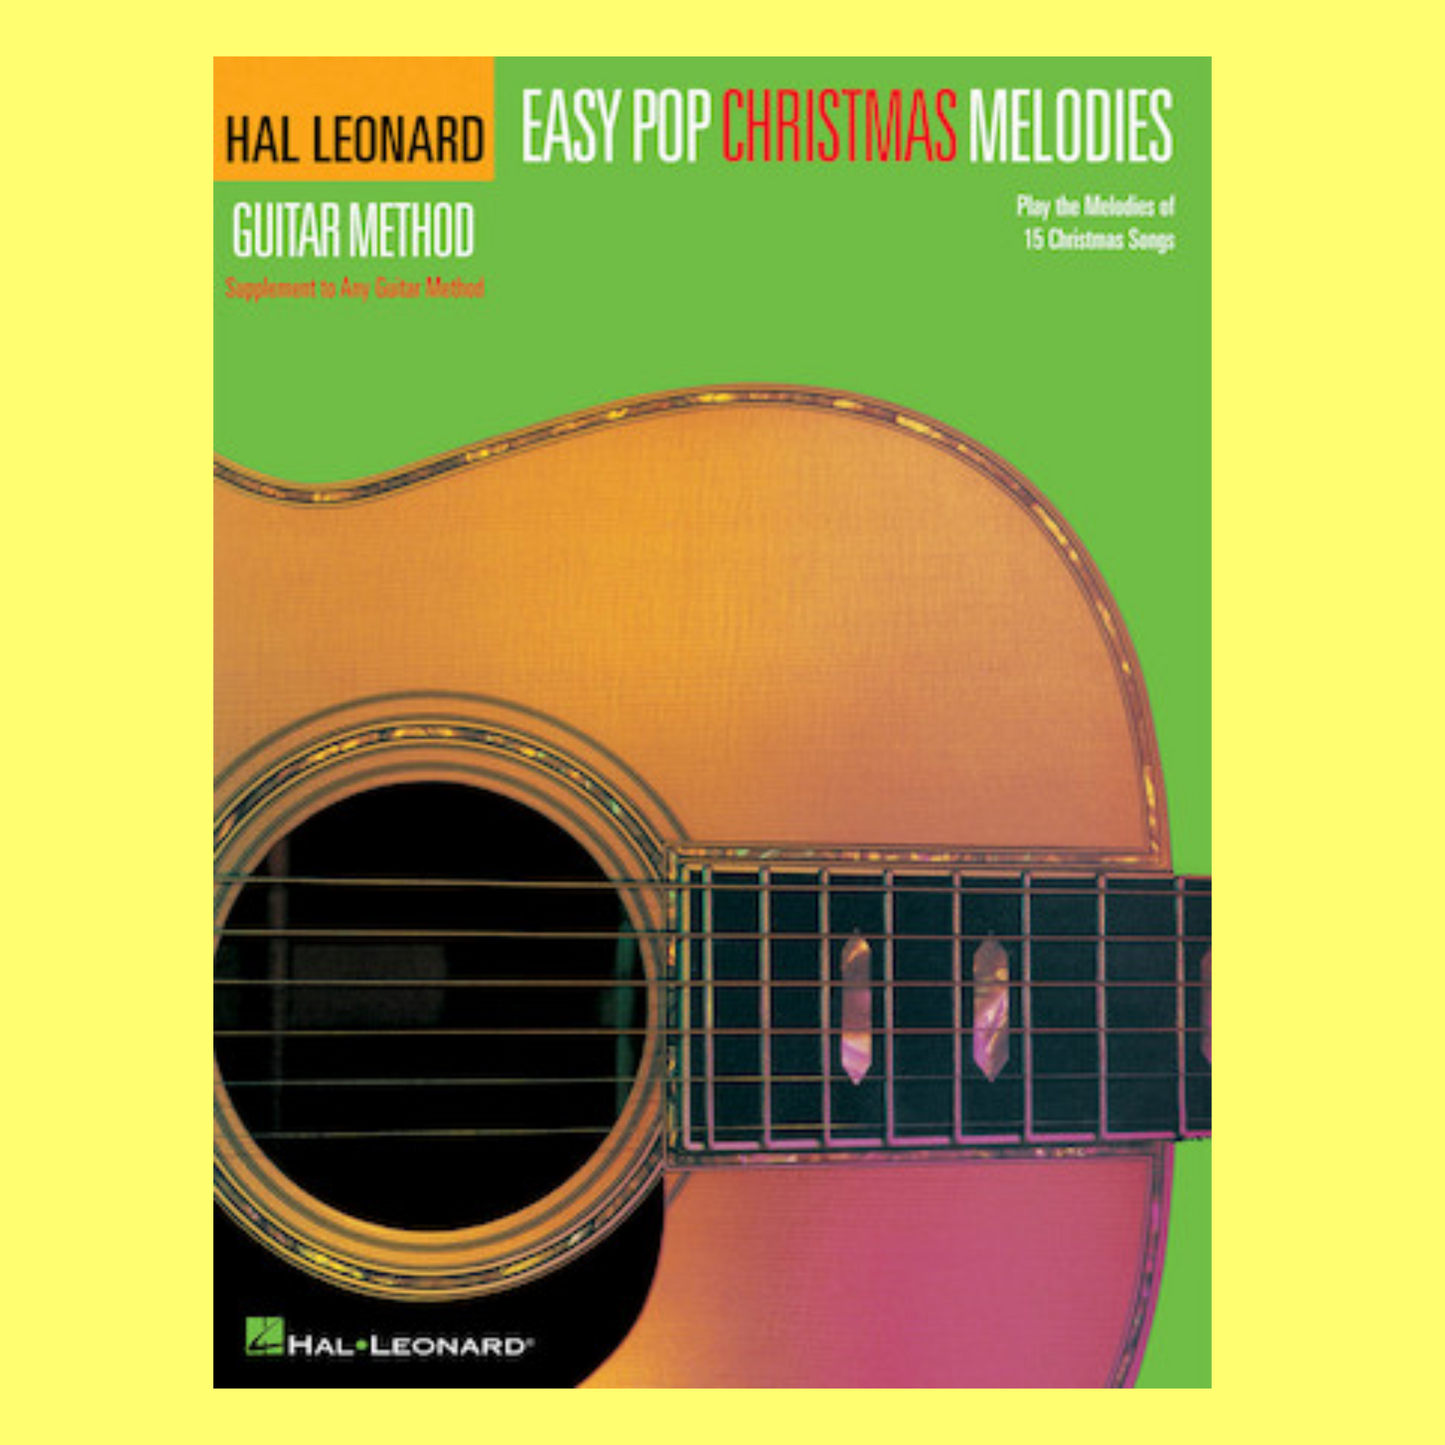 Hal Leonard Guitar Method - Easy Pop Christmas Melodies Book